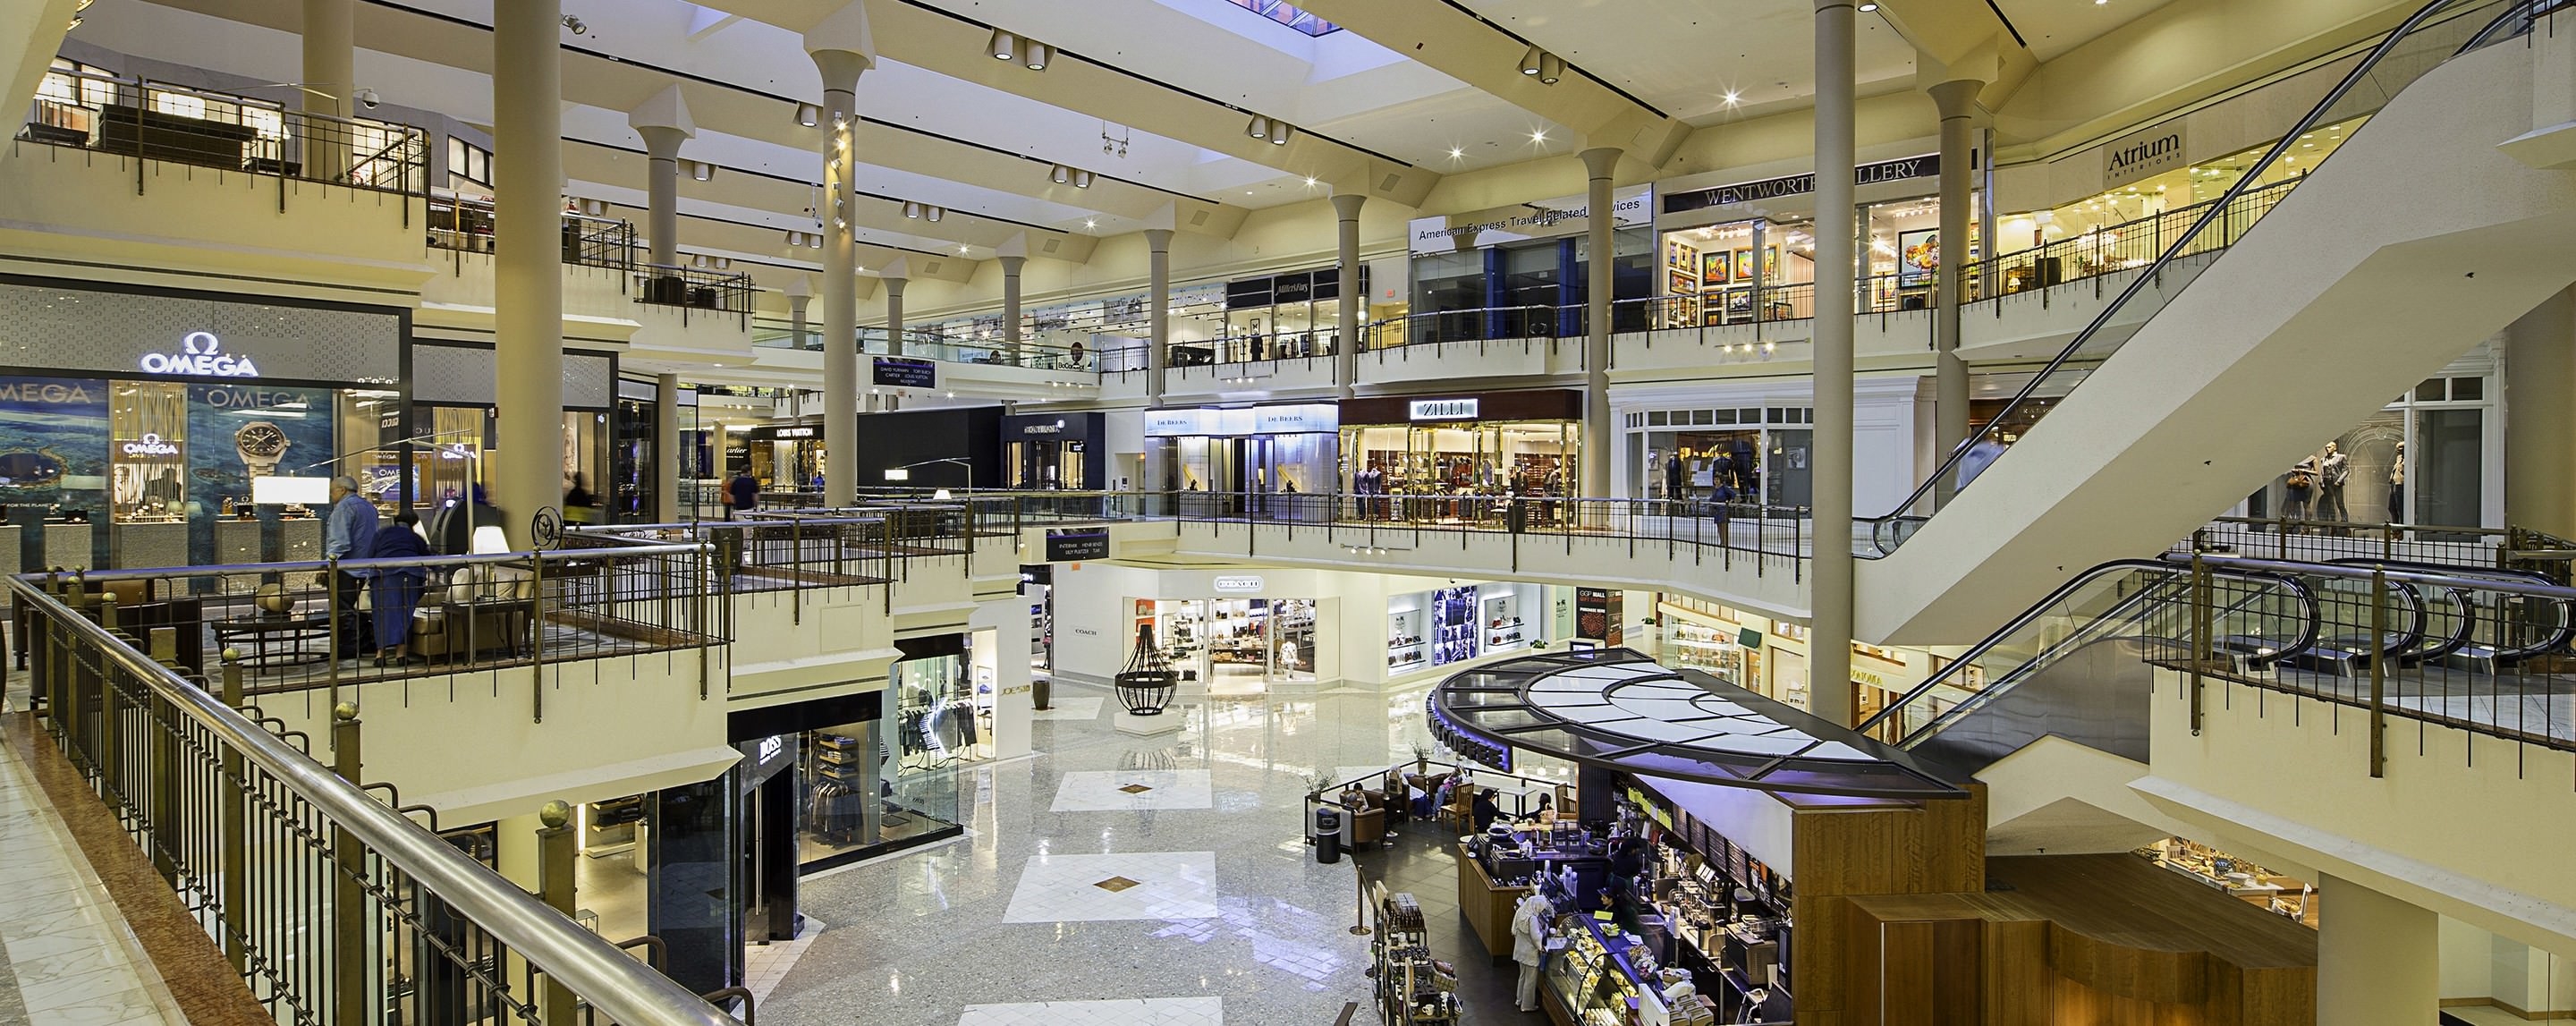 Tysons Galleria (101 stores) - shopping in McLean, Virginia VA 22102 -  MallsCenters